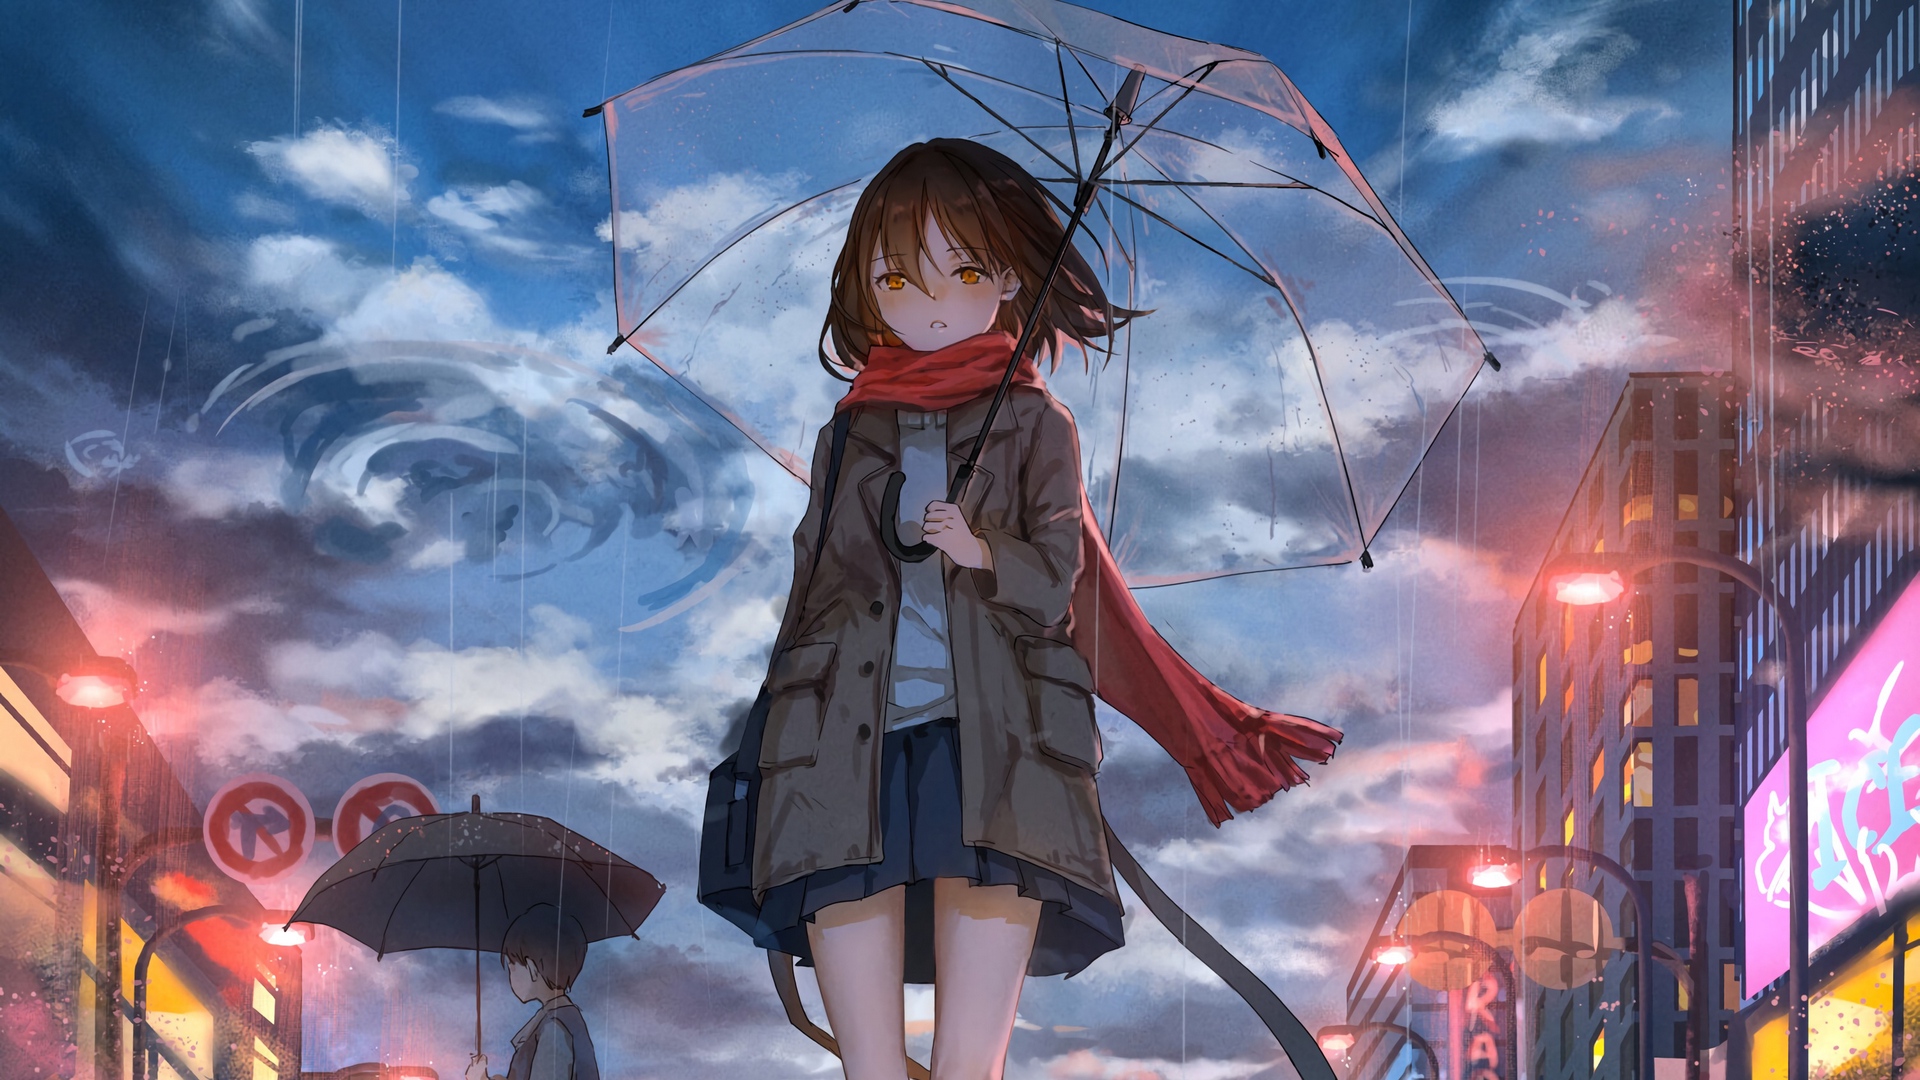 Wallpaper Girl Umbrella Anime Rain Sadness Anime Girl With Umbrella 2593621 Hd Wallpaper Backgrounds Download Anime, strike witches, aesthetic, girl. wallpaper girl umbrella anime rain